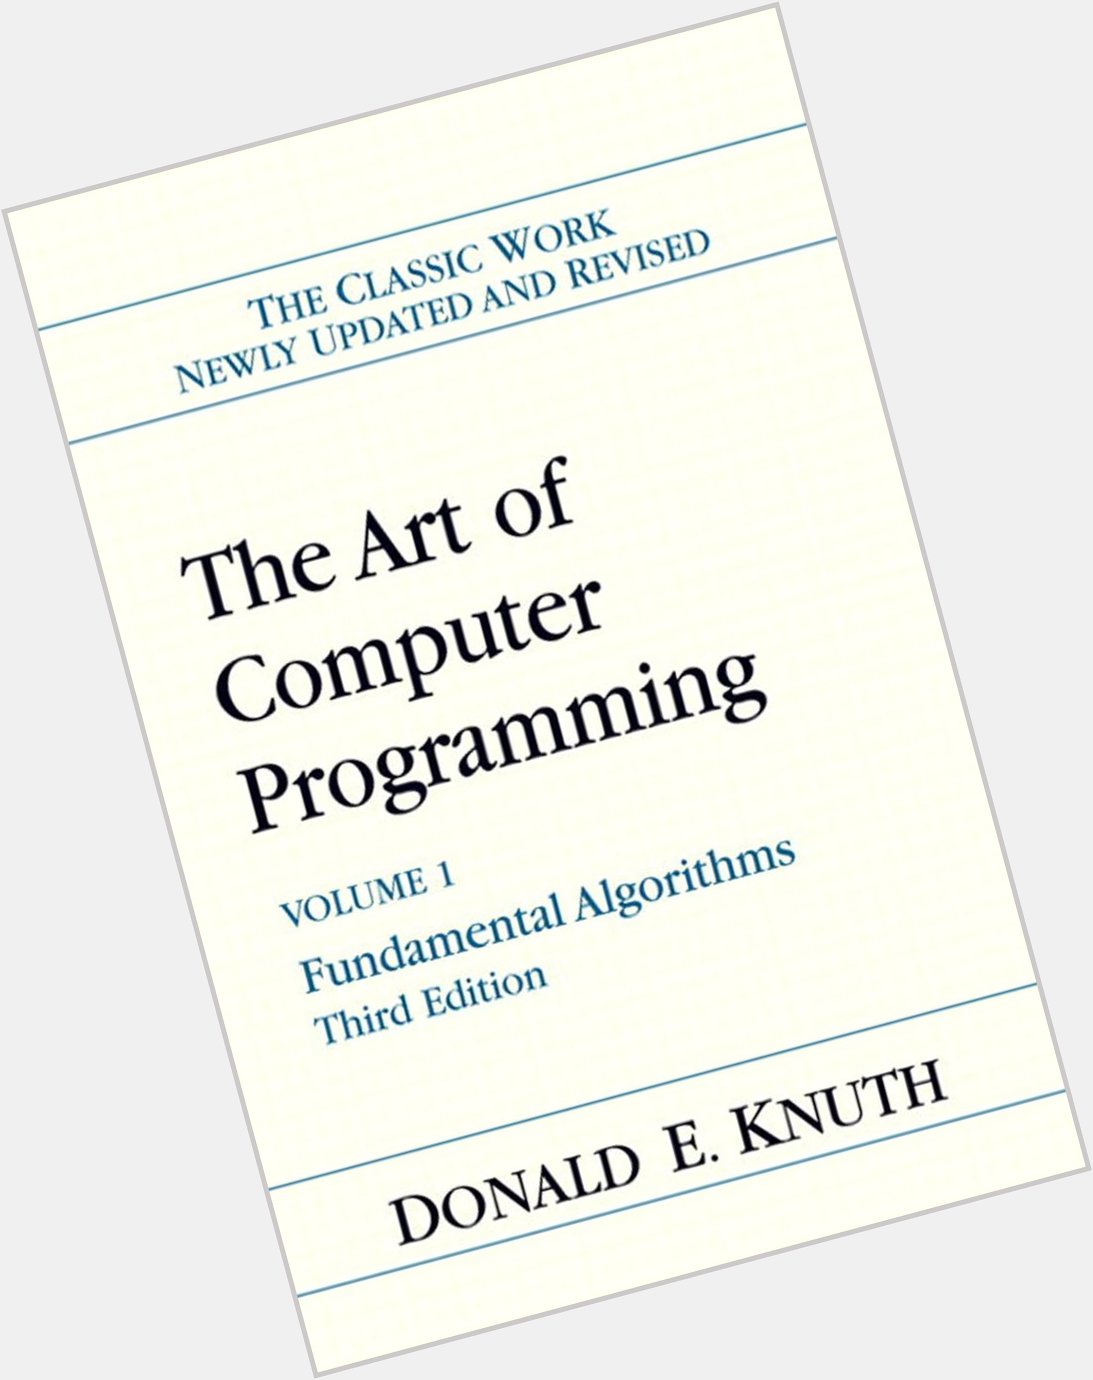 Happy birthday, Donald Knuth! 